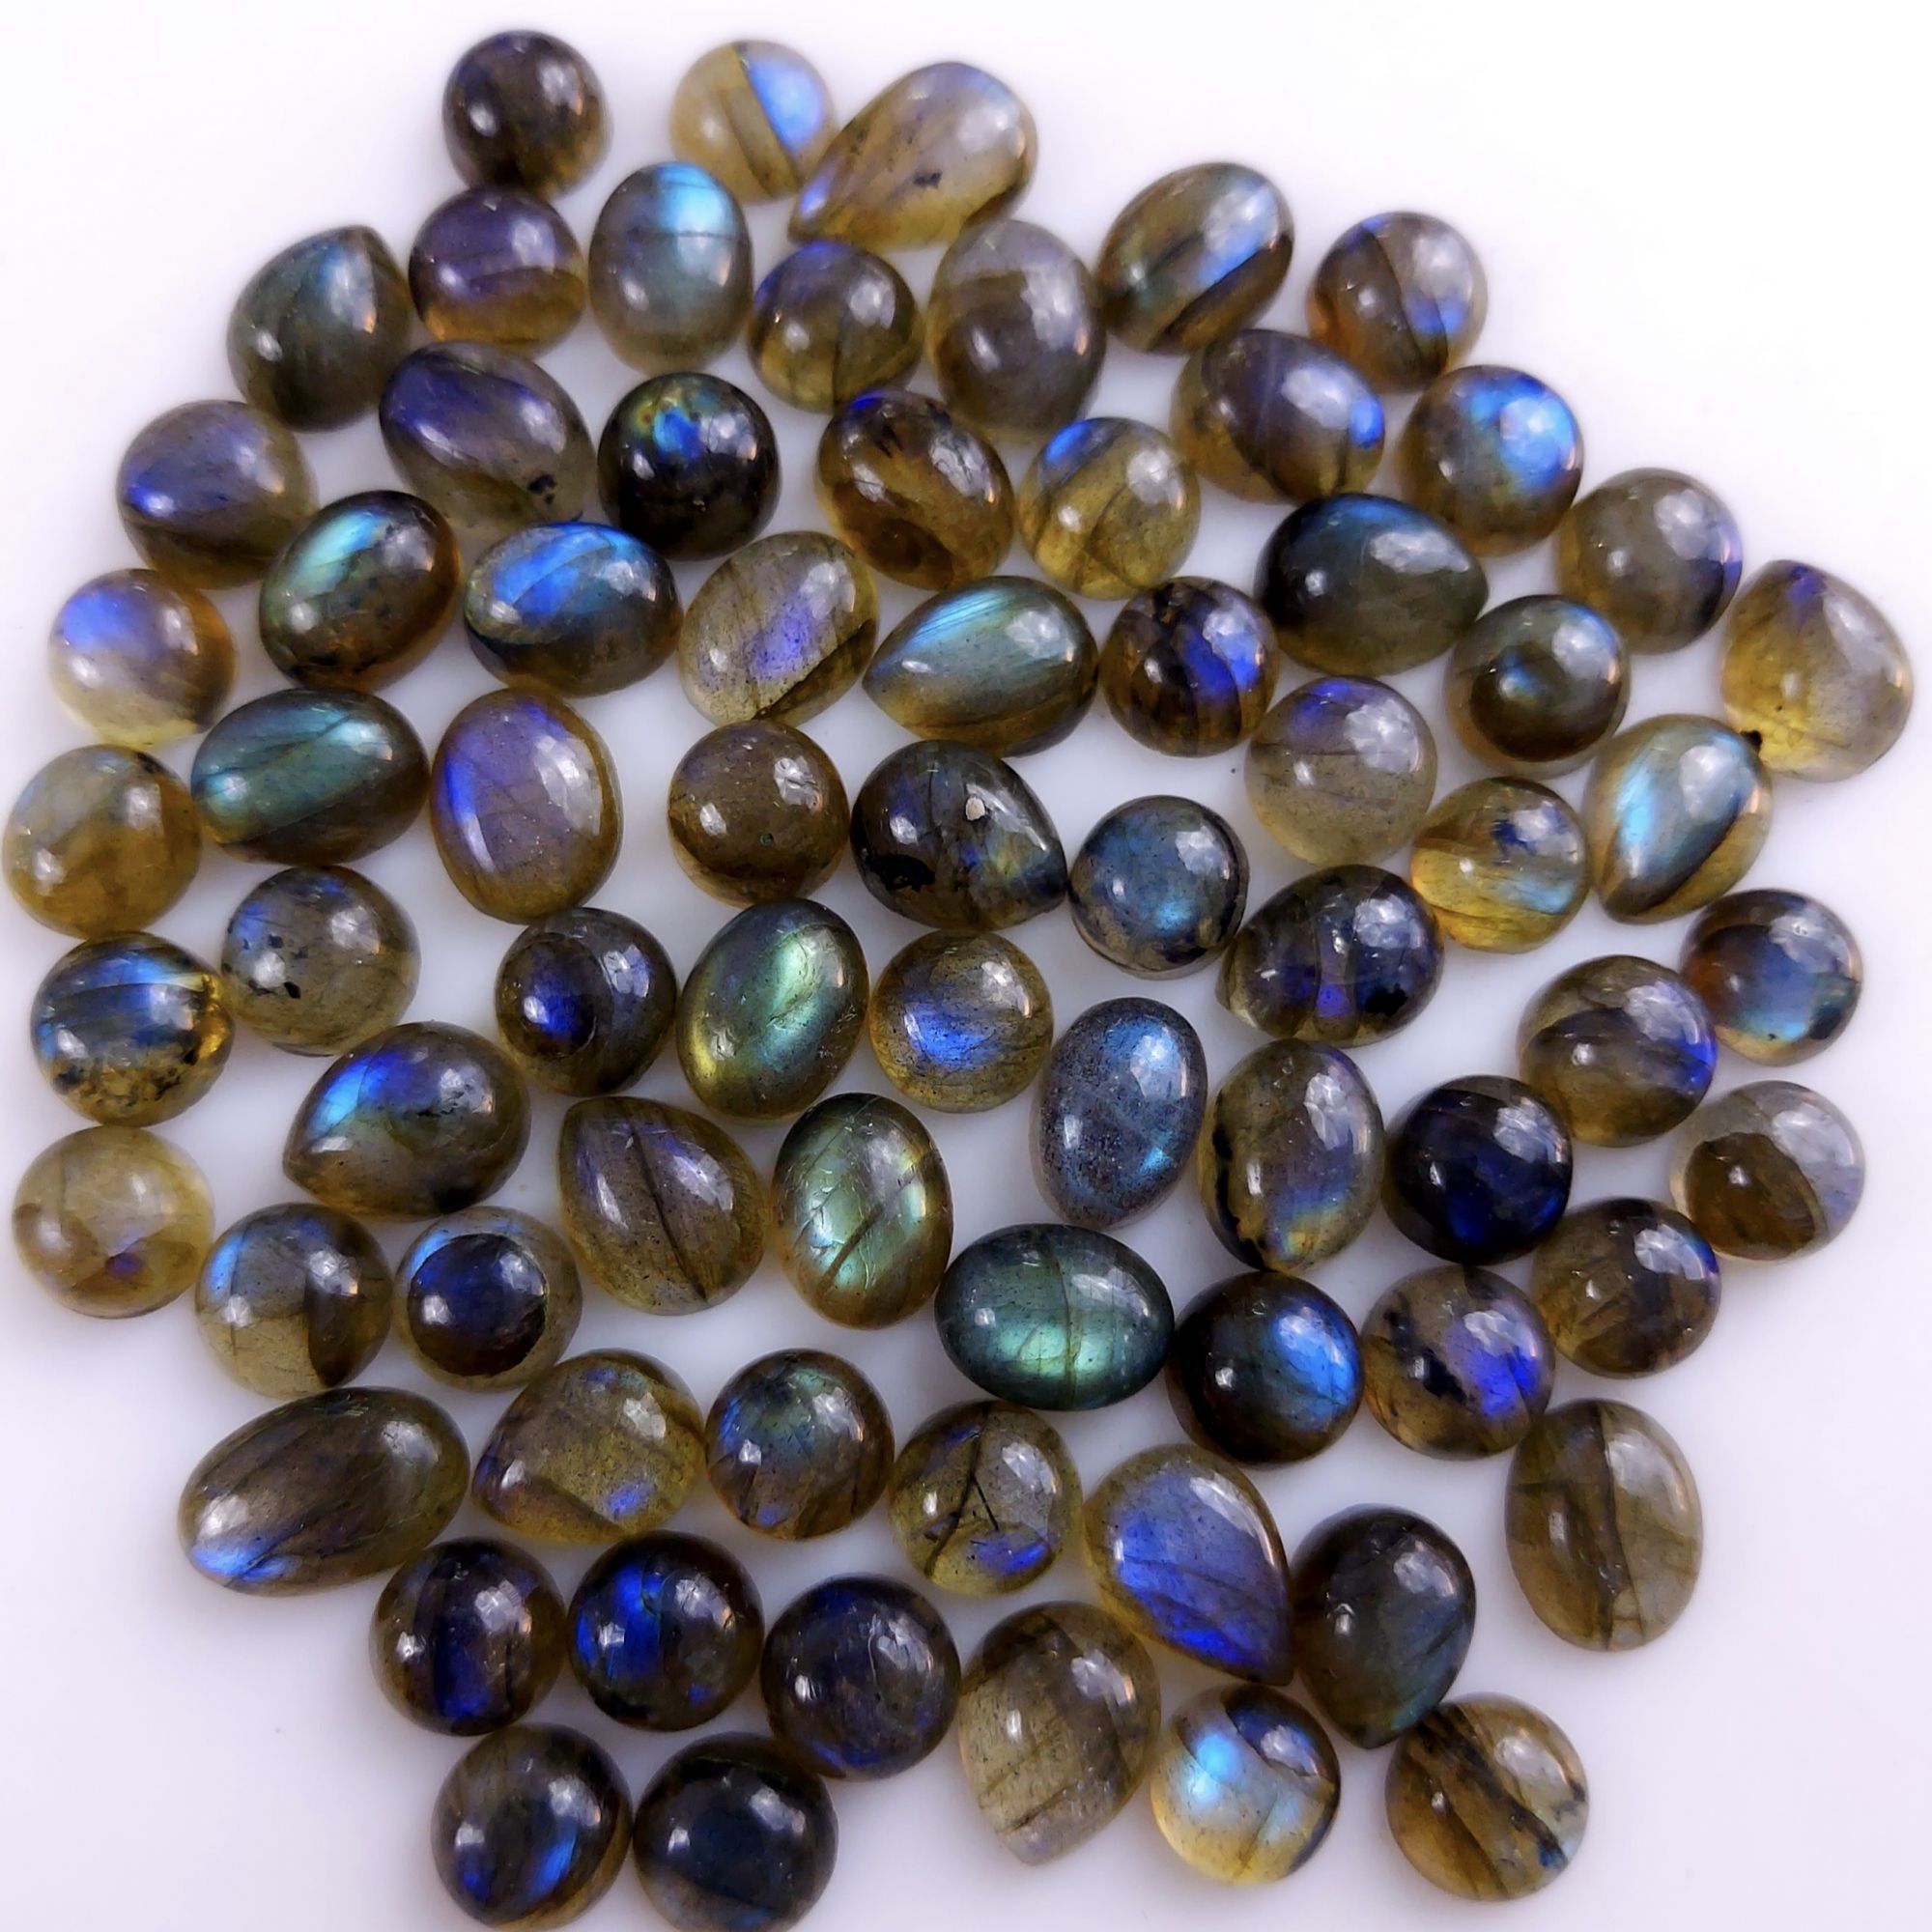 73 Pcs152Cts Natural Multifire Labradorite Loose Cabochon Gemstone Lot for Jewelry Making  8x5 5x5mm#1068